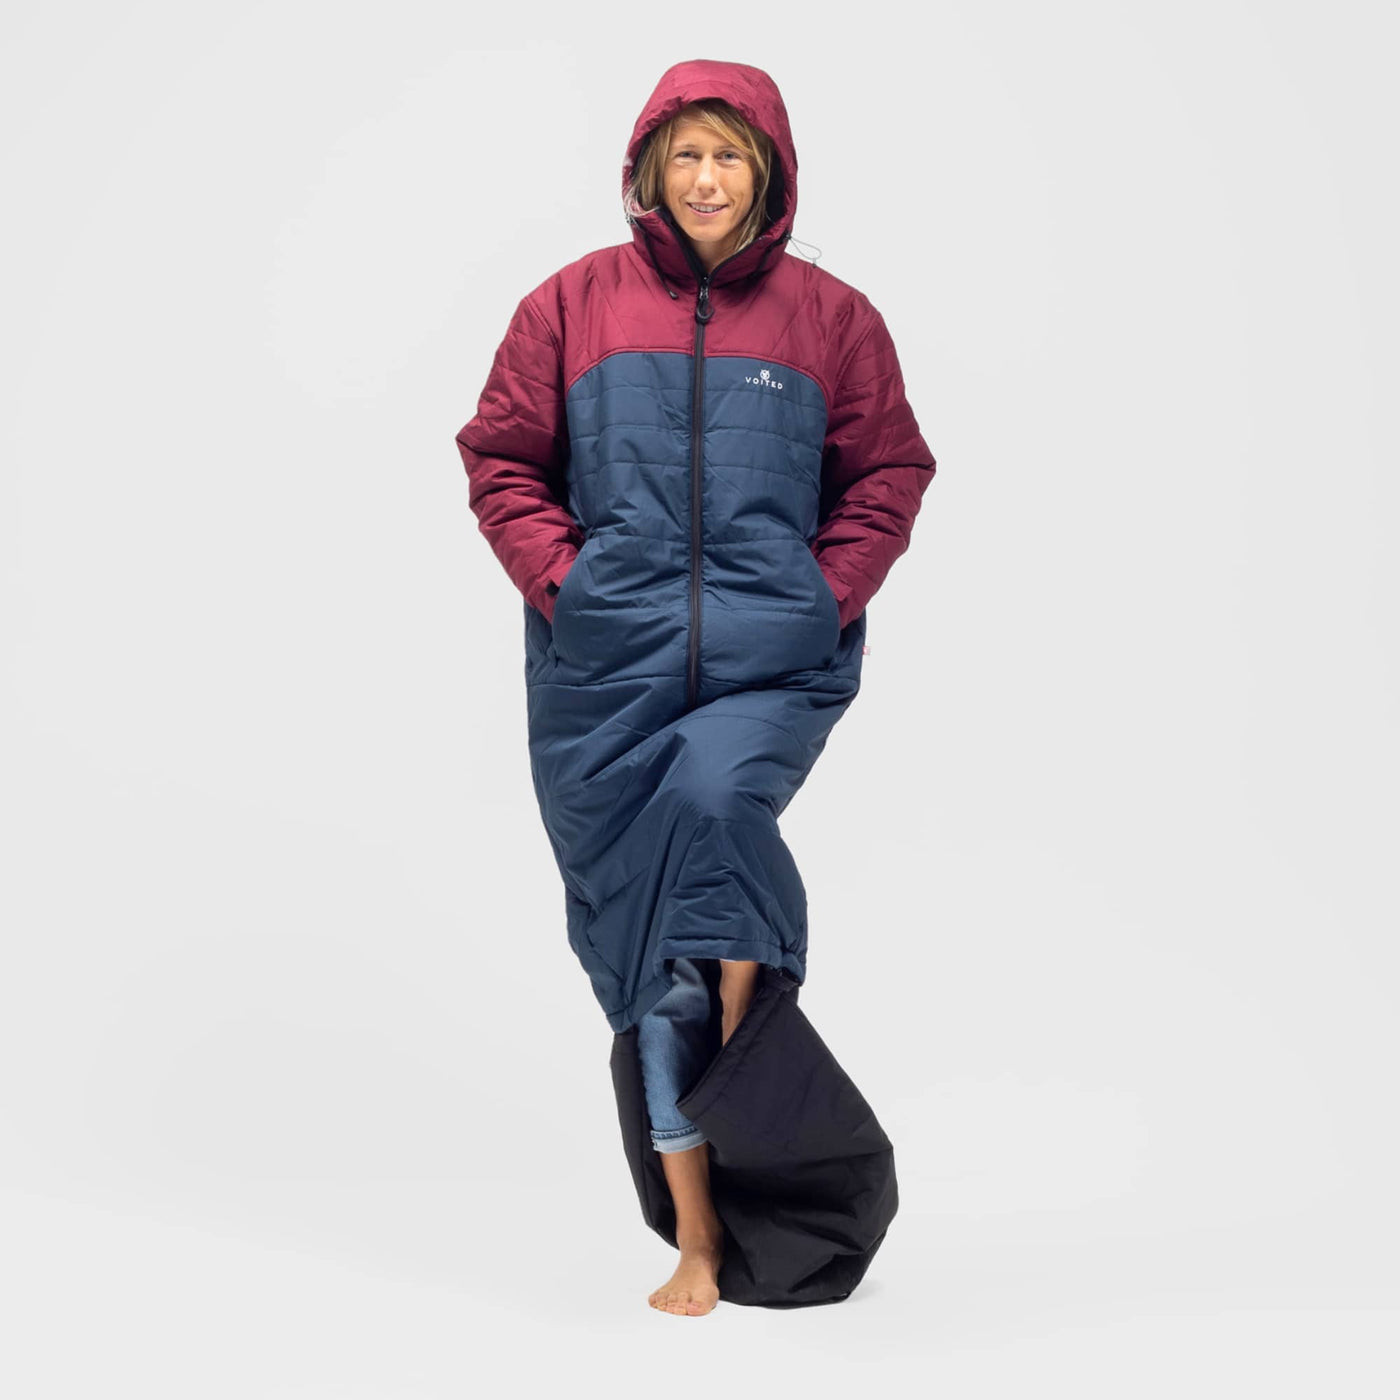 VOITED Premium Slumber Jacket for Camping, Vanlife & Indoor - Cardinal / Navy / Black